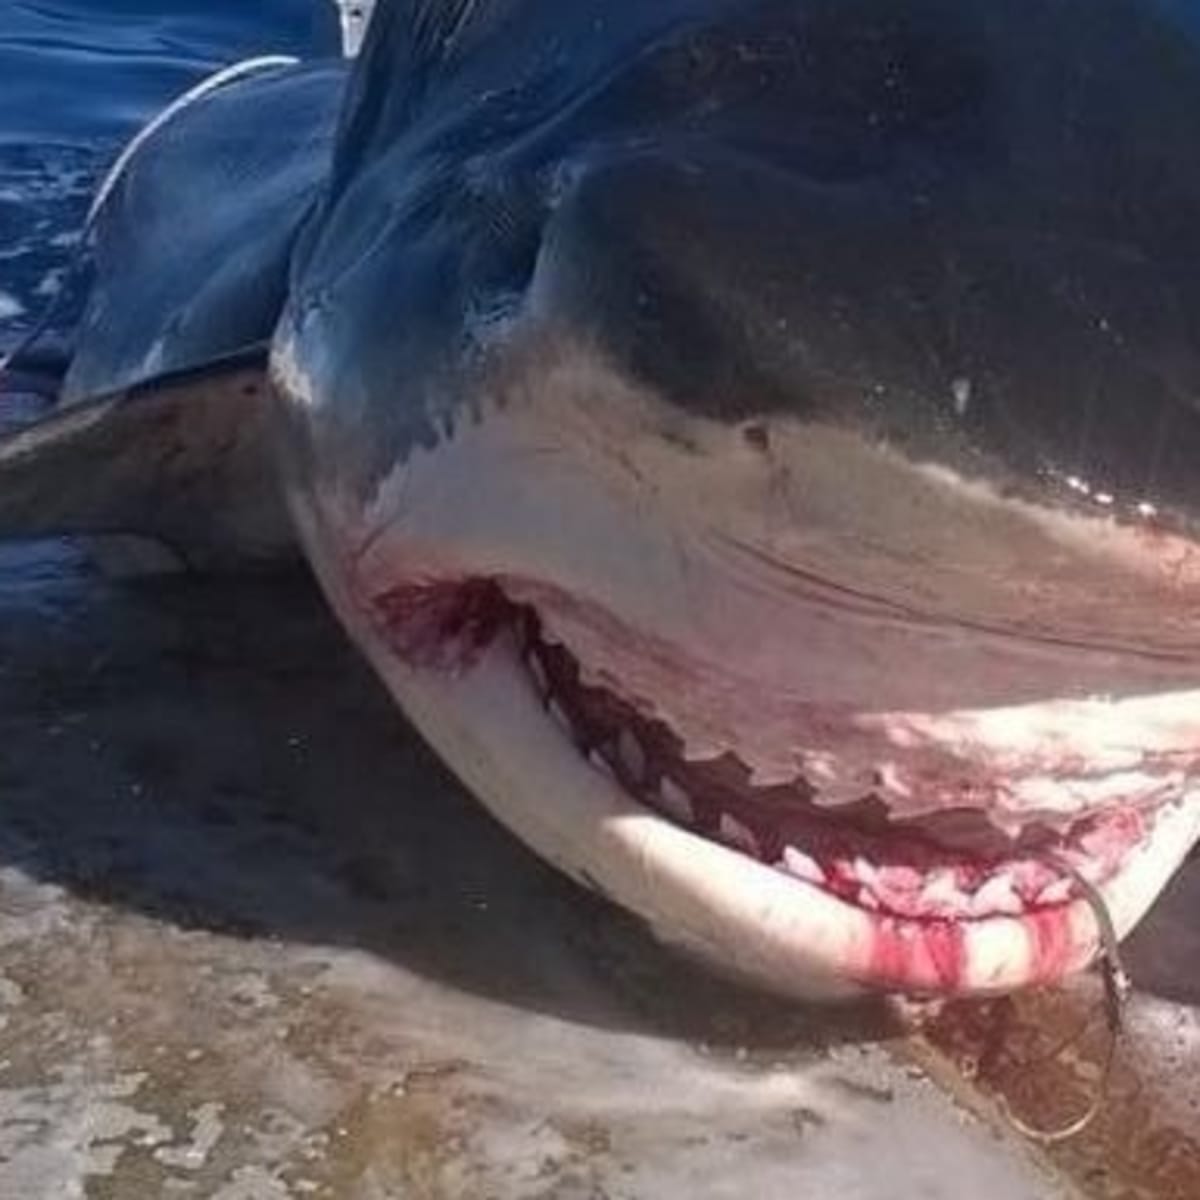 2 Western Australia fisherman catch giant tiger shark and share amazing  photos